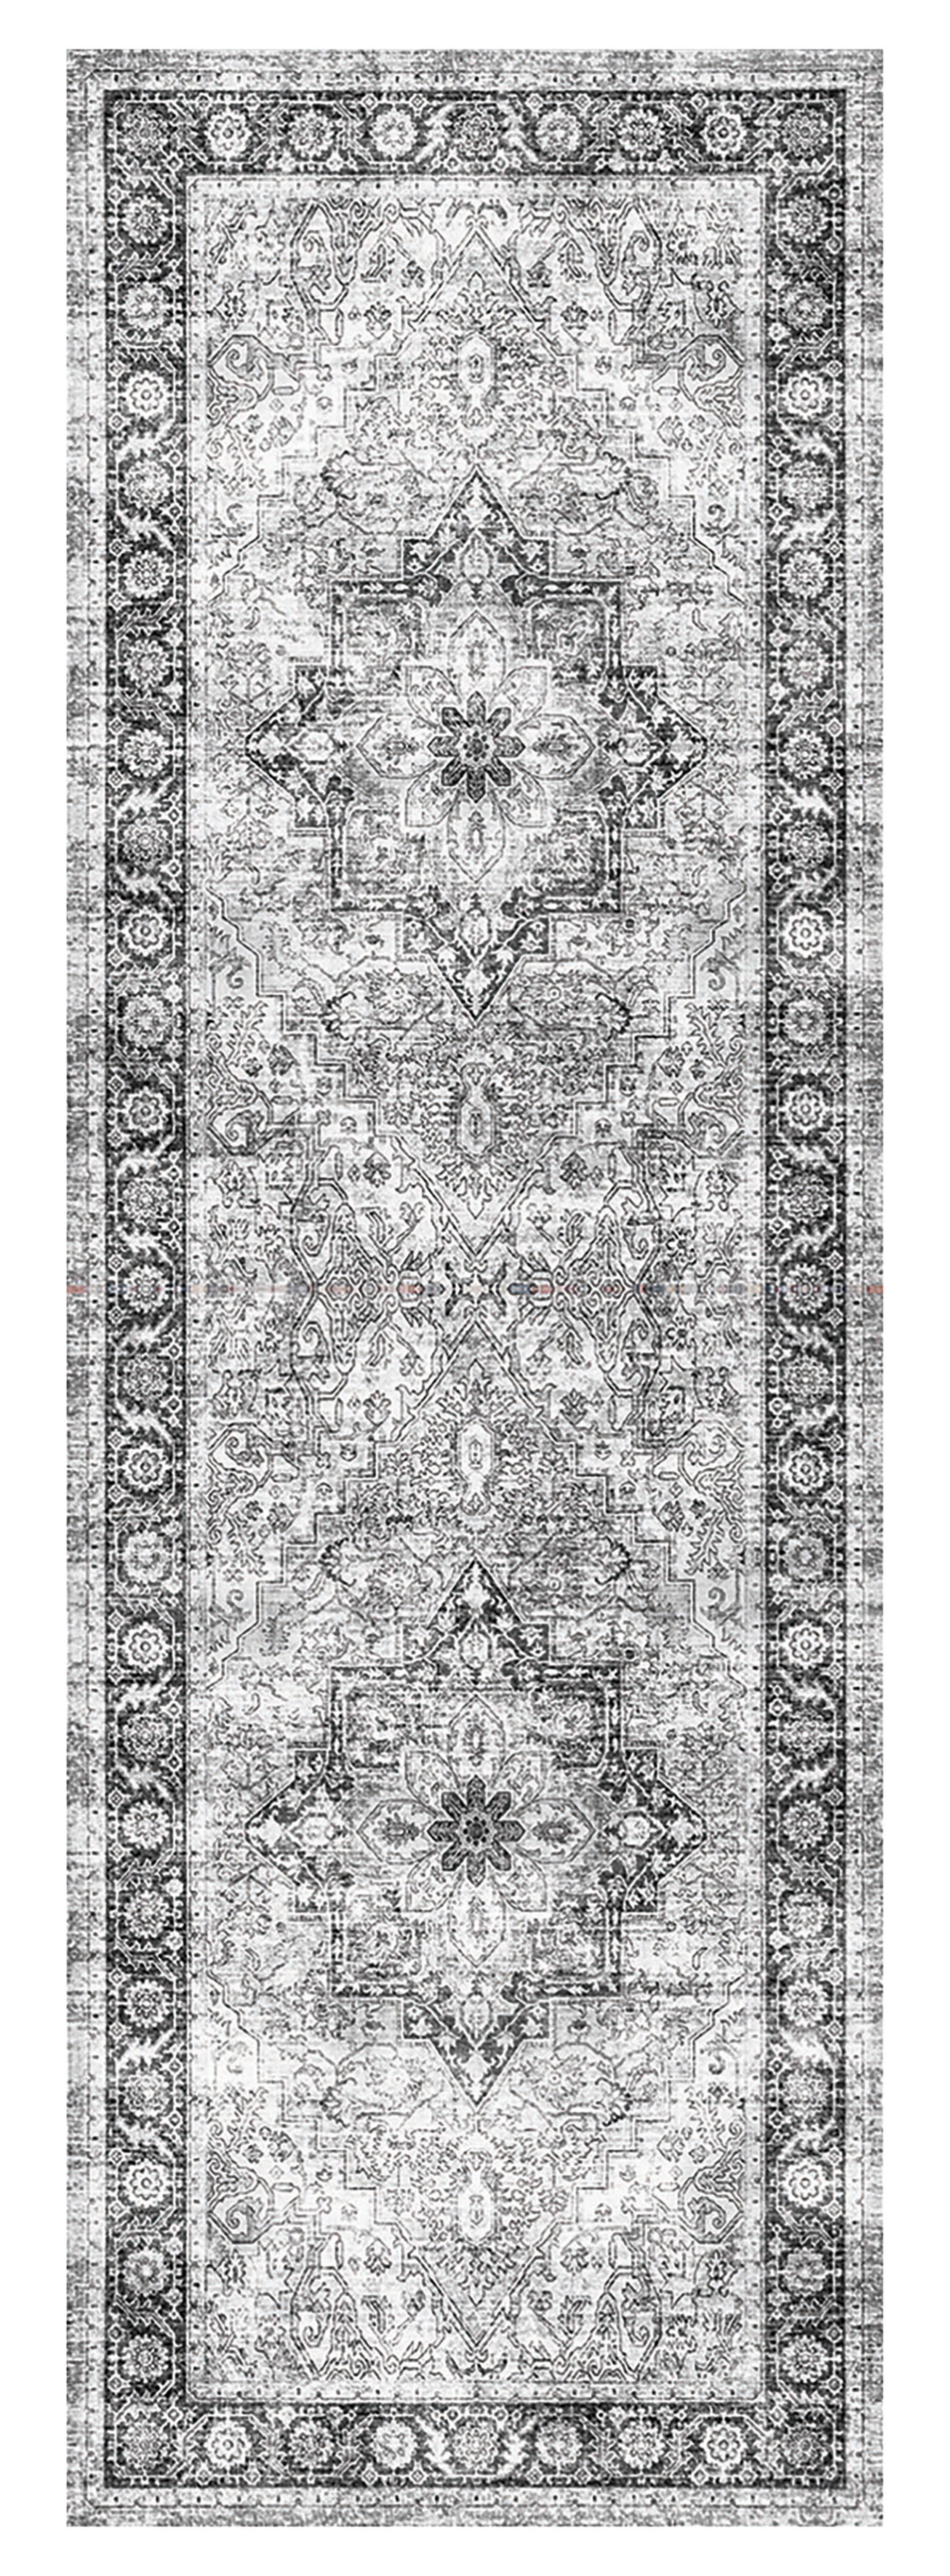 Azar Grey Traditional Rug 180cmx60cm